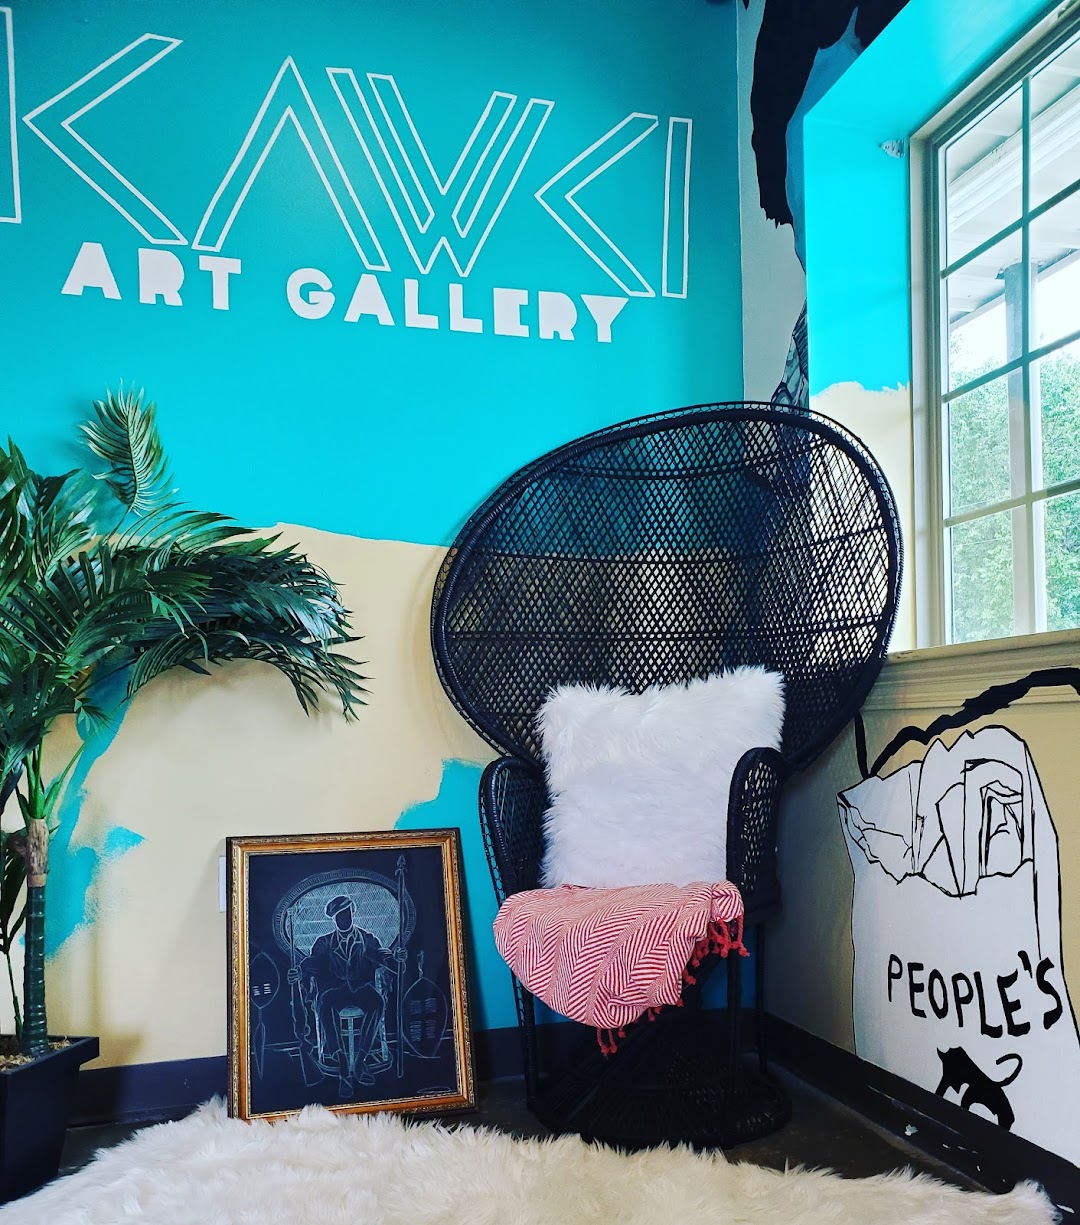 KAWD Art Gallery